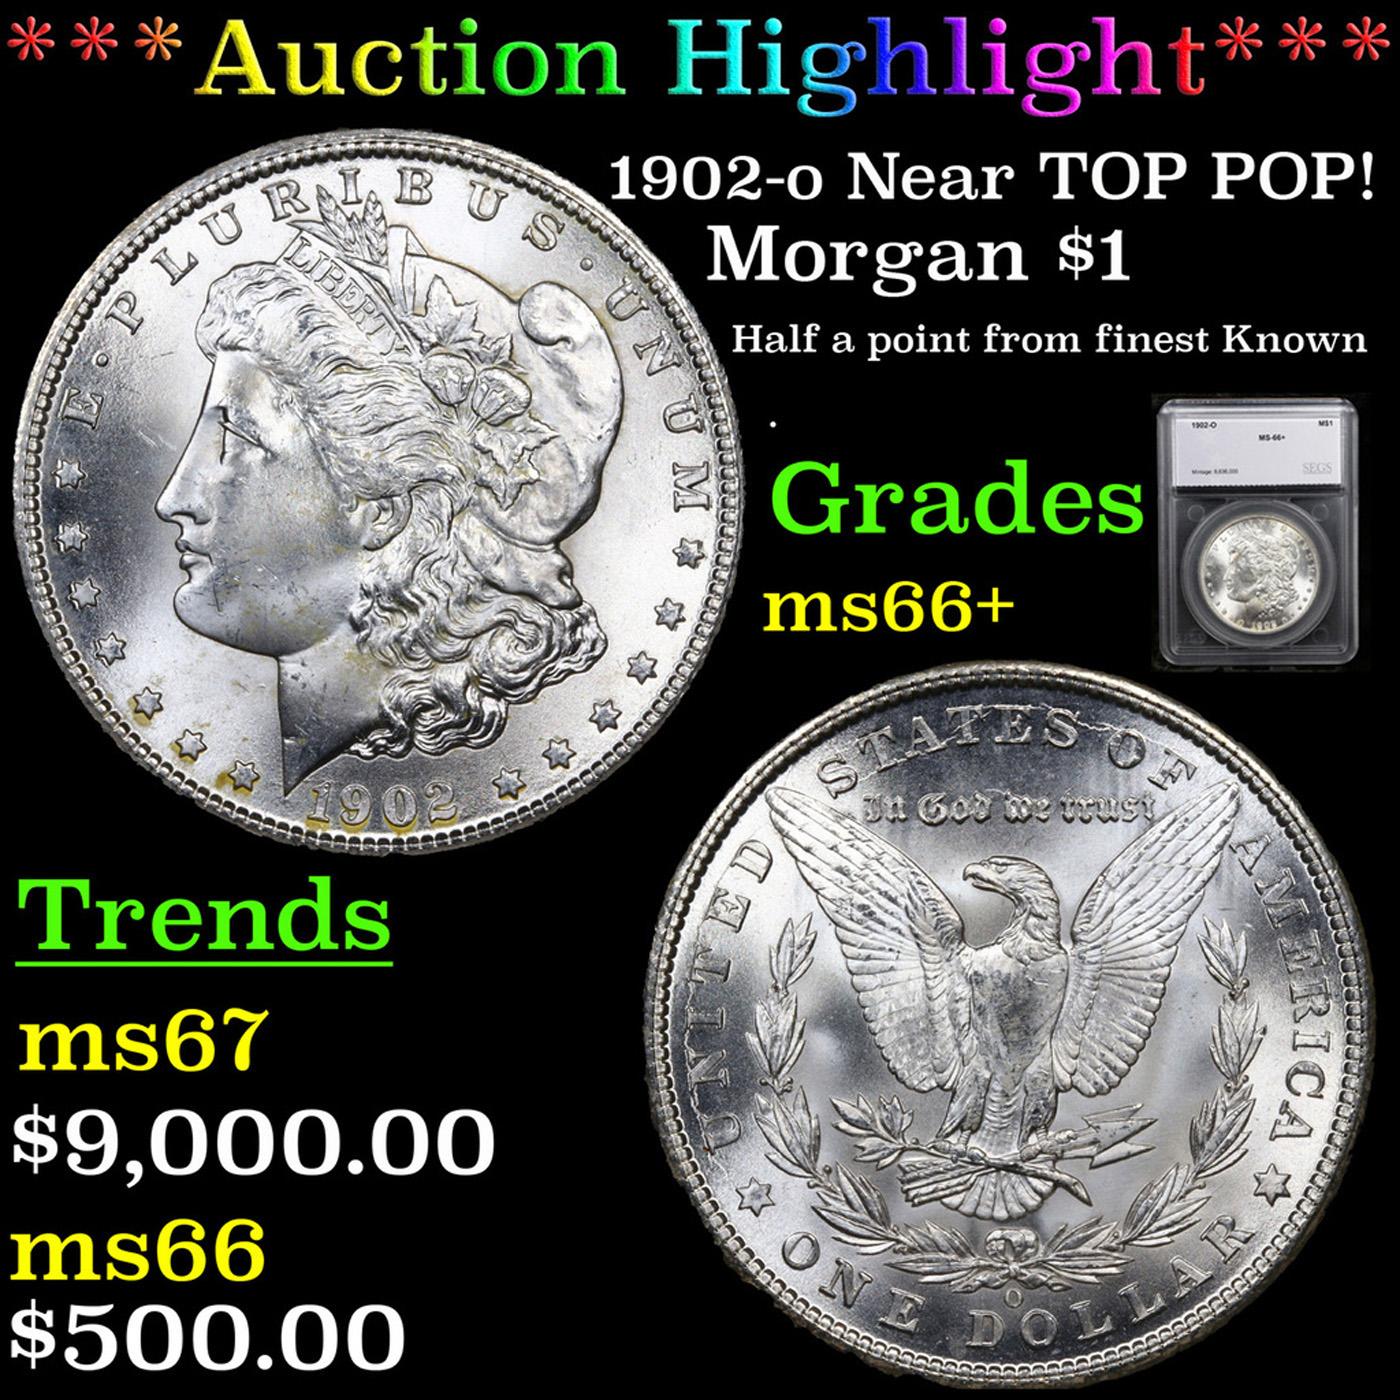 ***Auction Highlight*** 1902-o Morgan Dollar Near TOP POP! $1 Graded ms66+ By SEGS (fc)